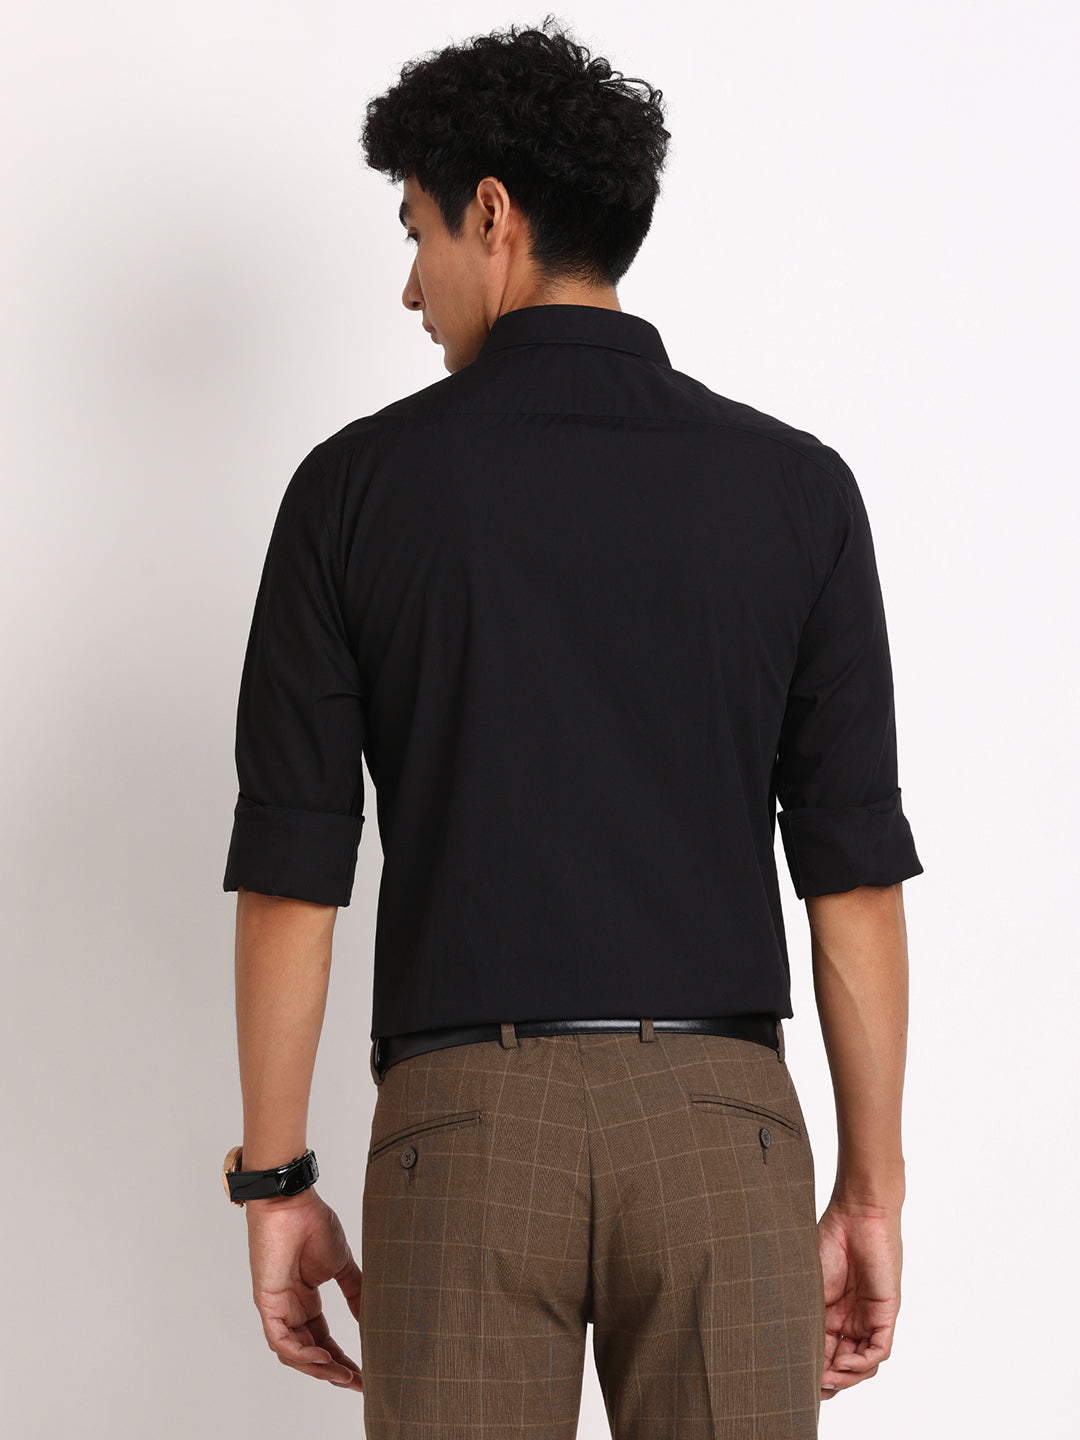 Cotton Blend Black Self Design Slim Fit Full Sleeve Casual Shirt